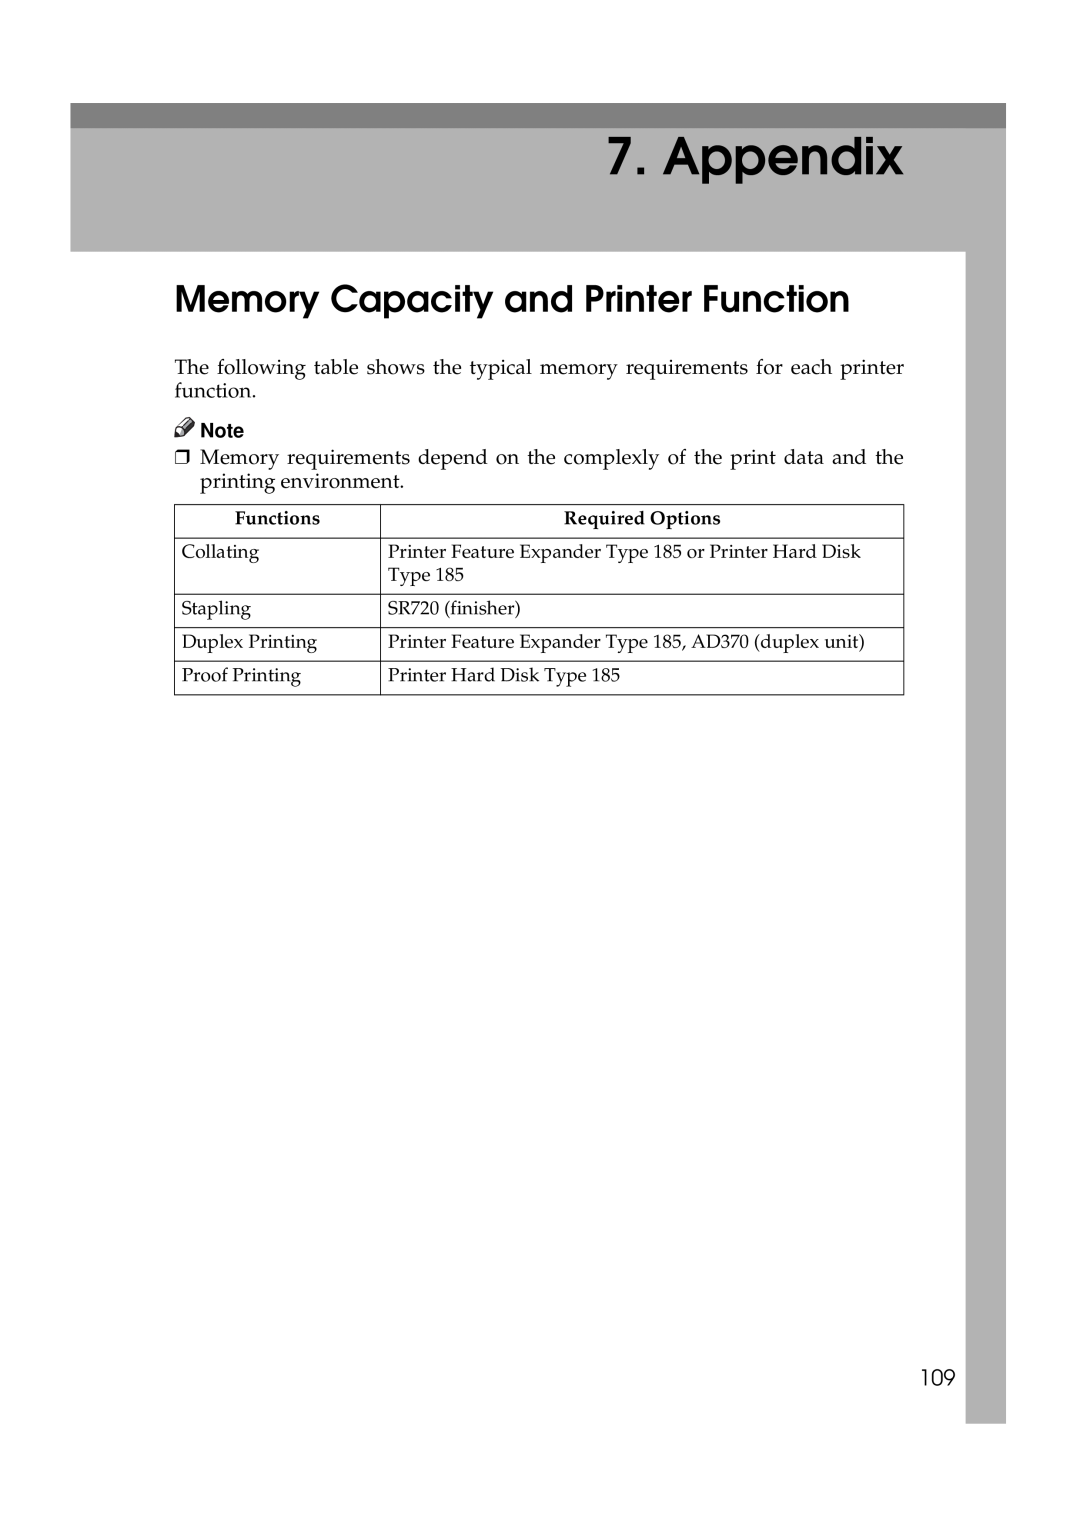 Ricoh Aficio AP2700 operating instructions Appendix, Memory Capacity and Printer Function 